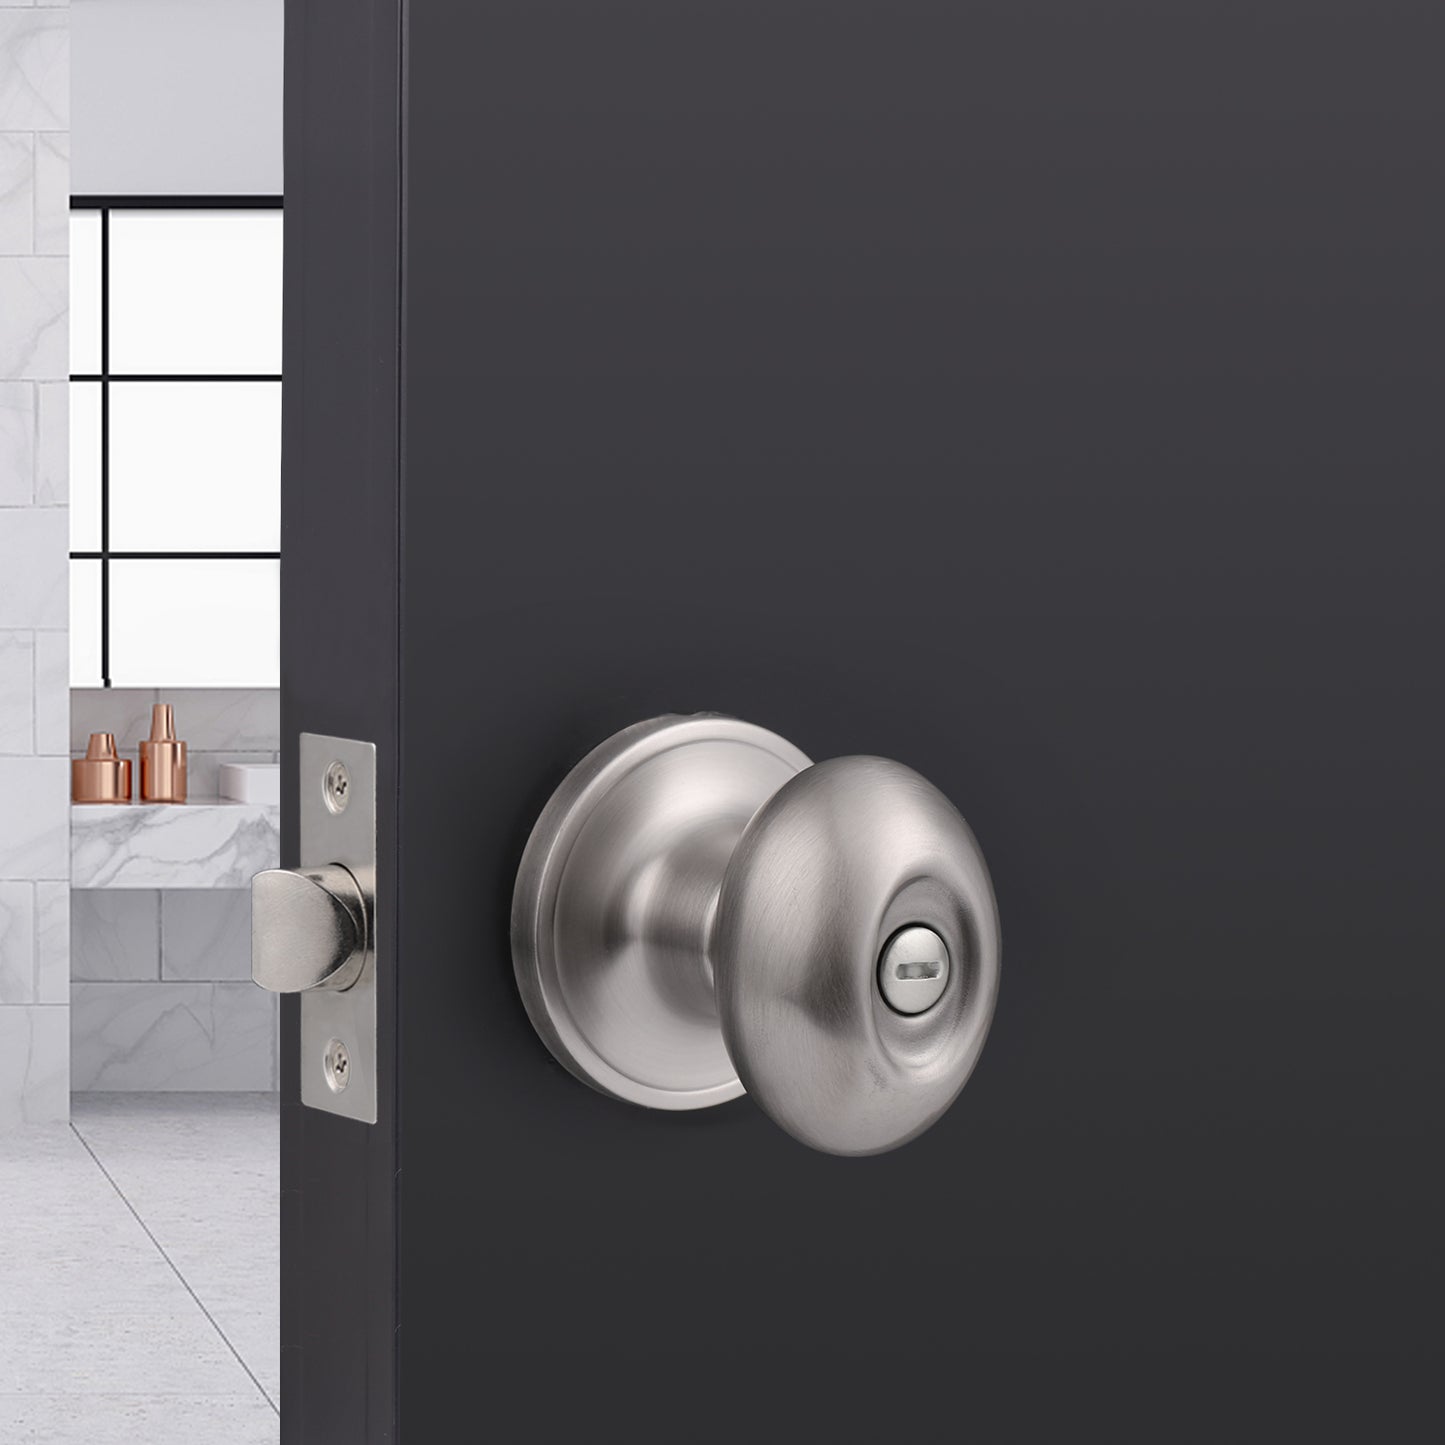 Privacy Door Knobs Bedroom/Bathroom Door Lock set No Key Egg Knob Style Satin Nickel Finish DL692SNBK - Probrico